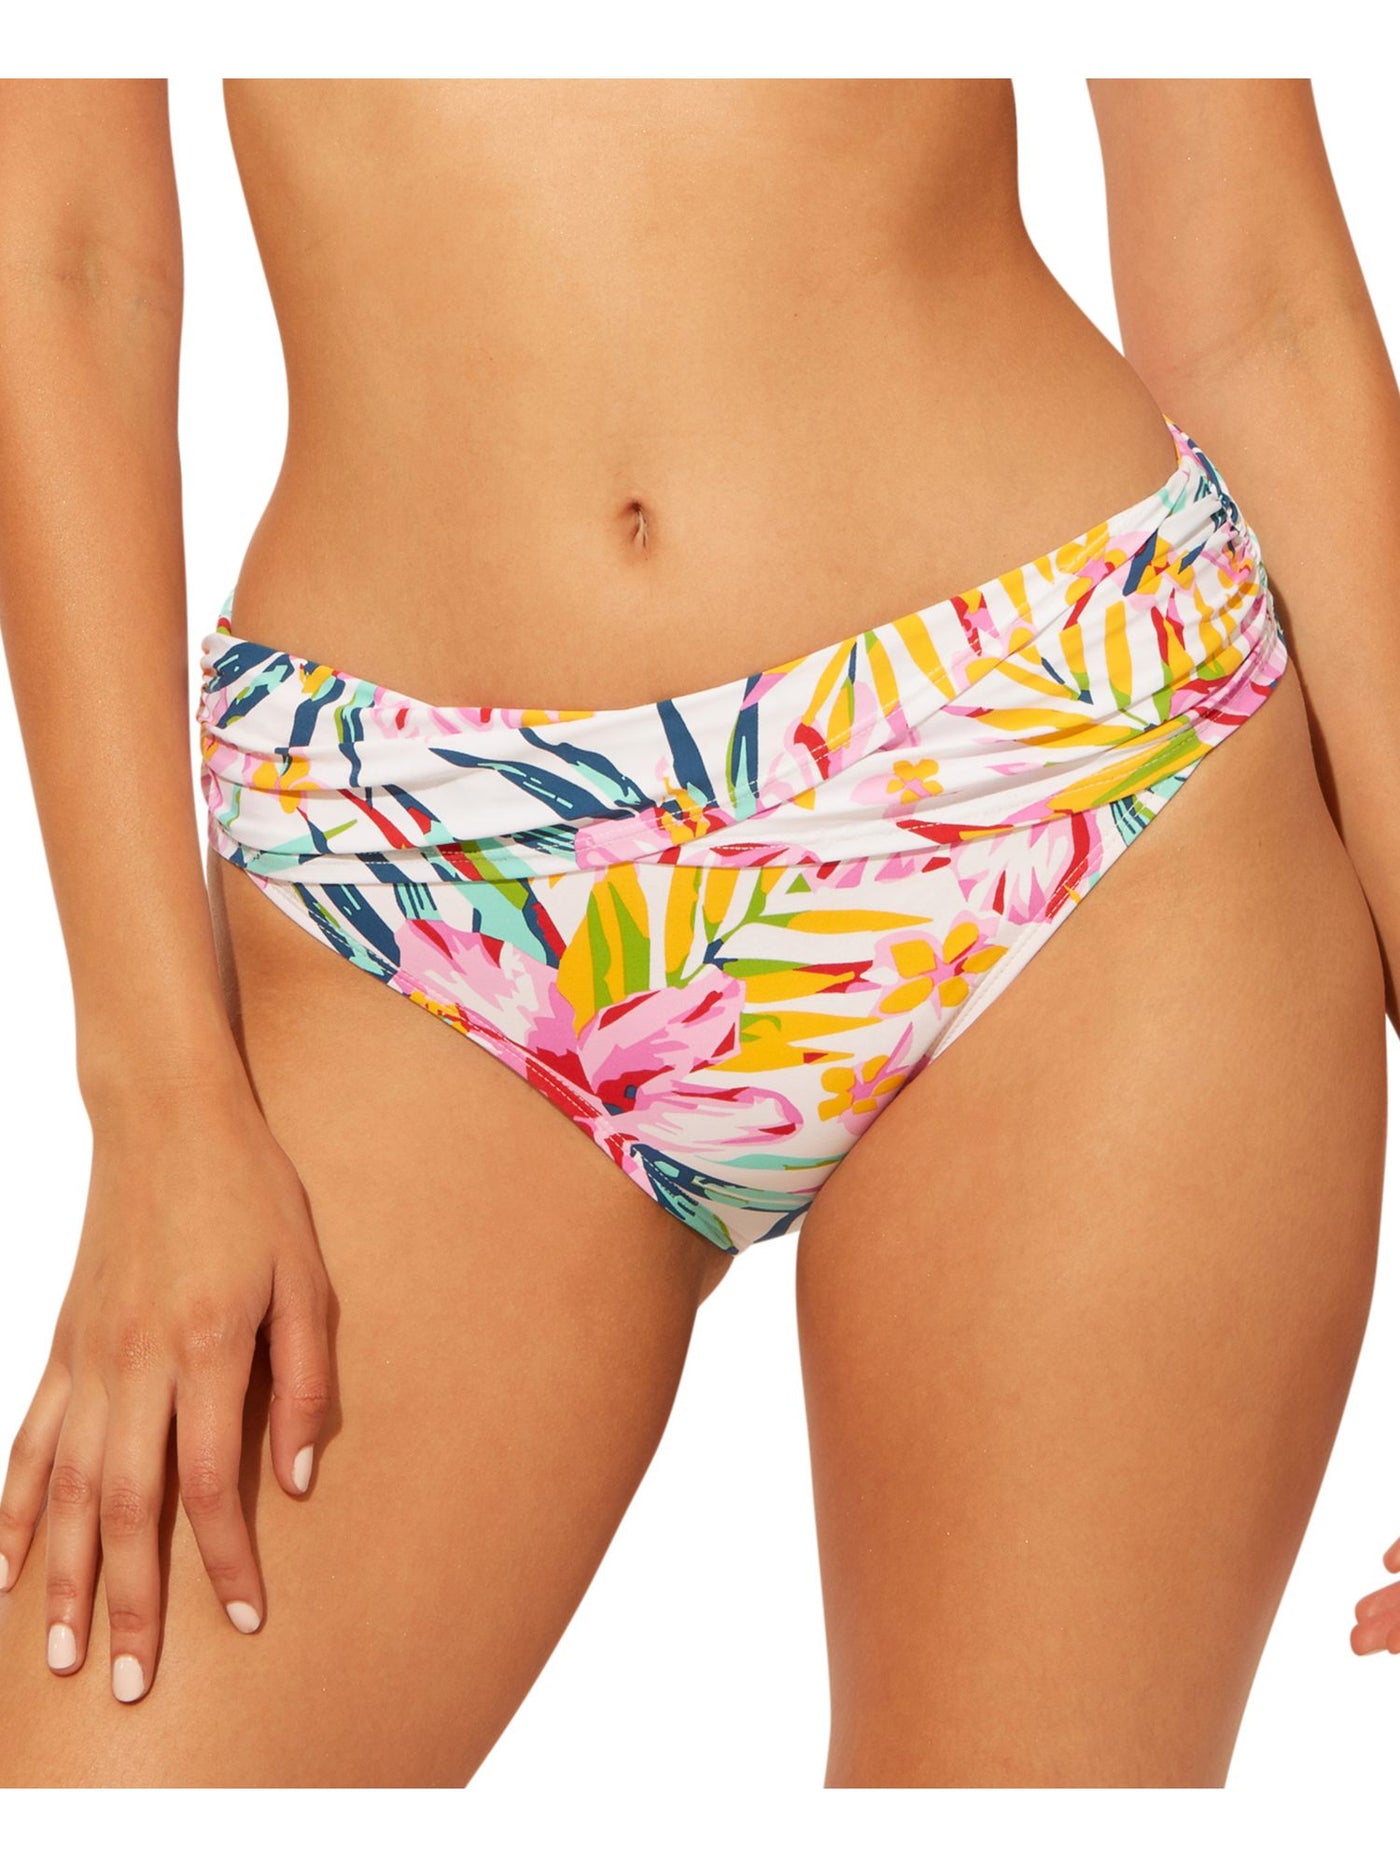 BLEU Women's Multi Color Floral Stretch FOLDOVER Full Coverage Hipster Swimsuit Bottom 12